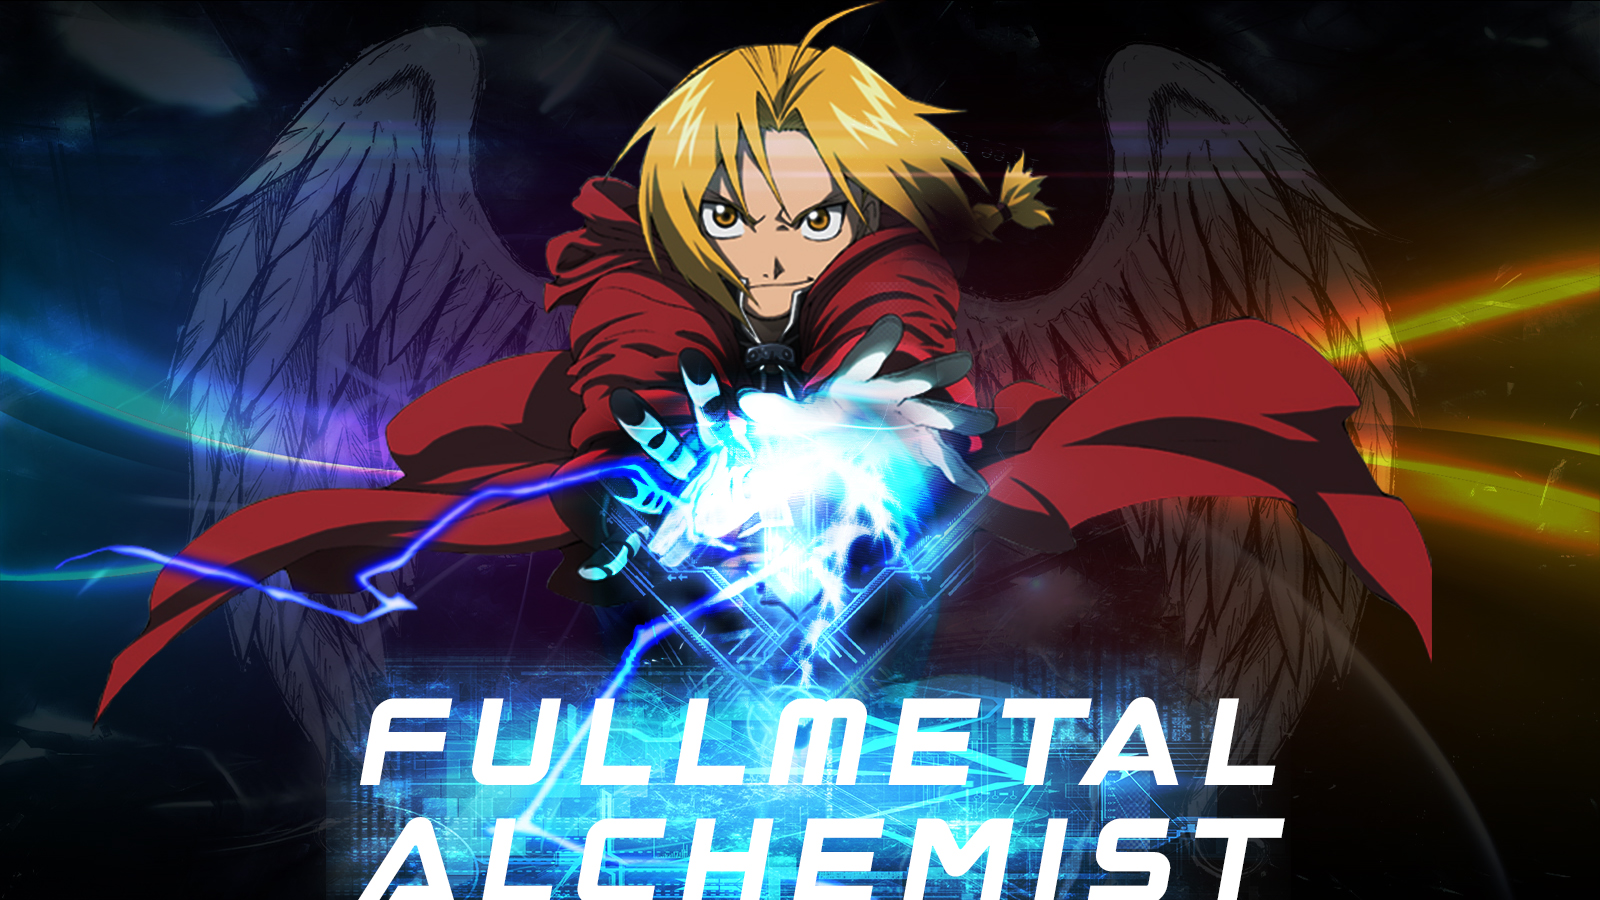 Fullmetal Alchemist deviantART